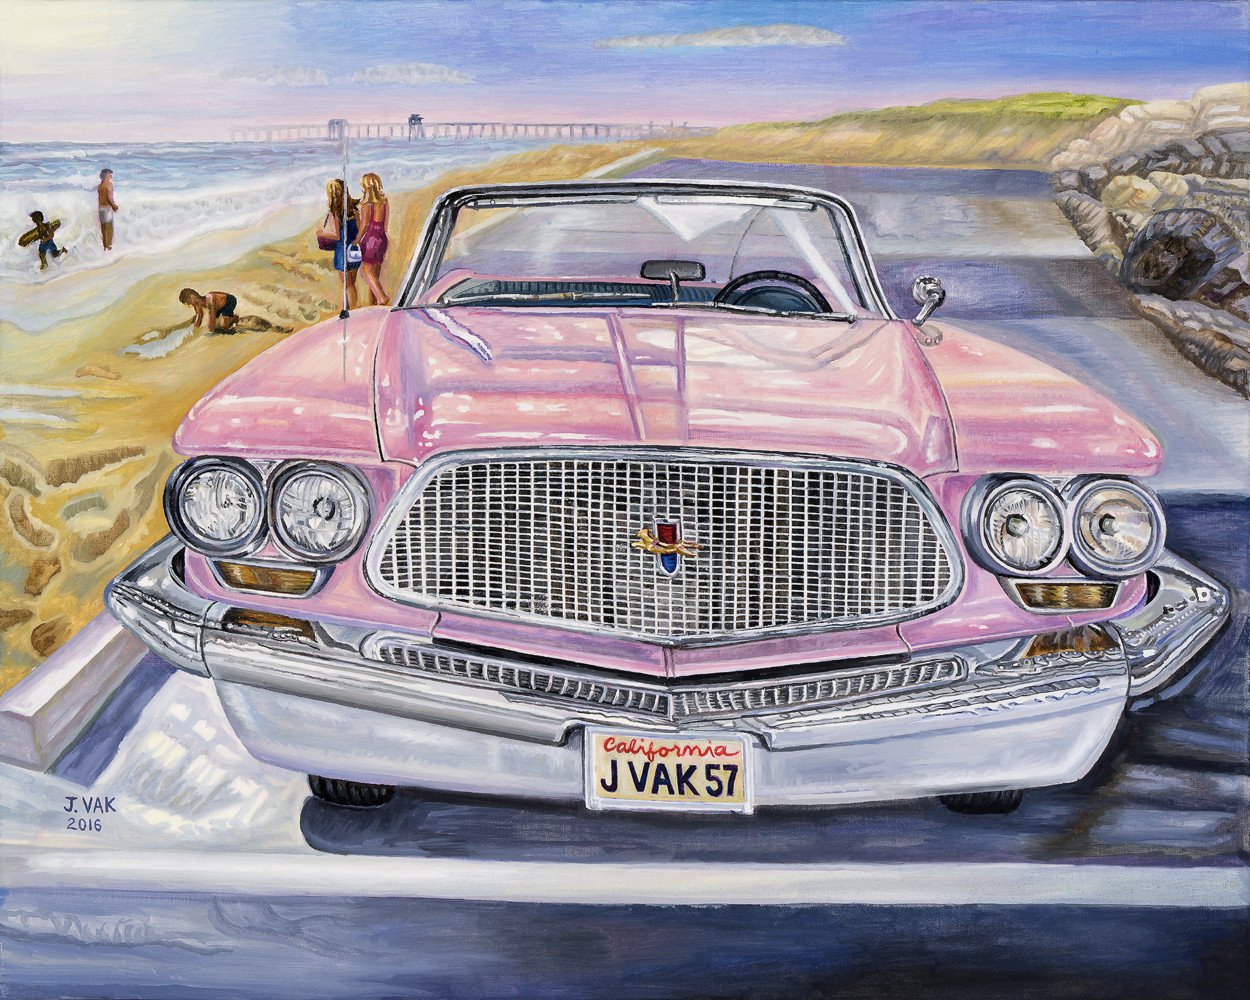 1960 Chrysler Windsor in Pink
24 X 30 Oil on Canvas
$2850
2016